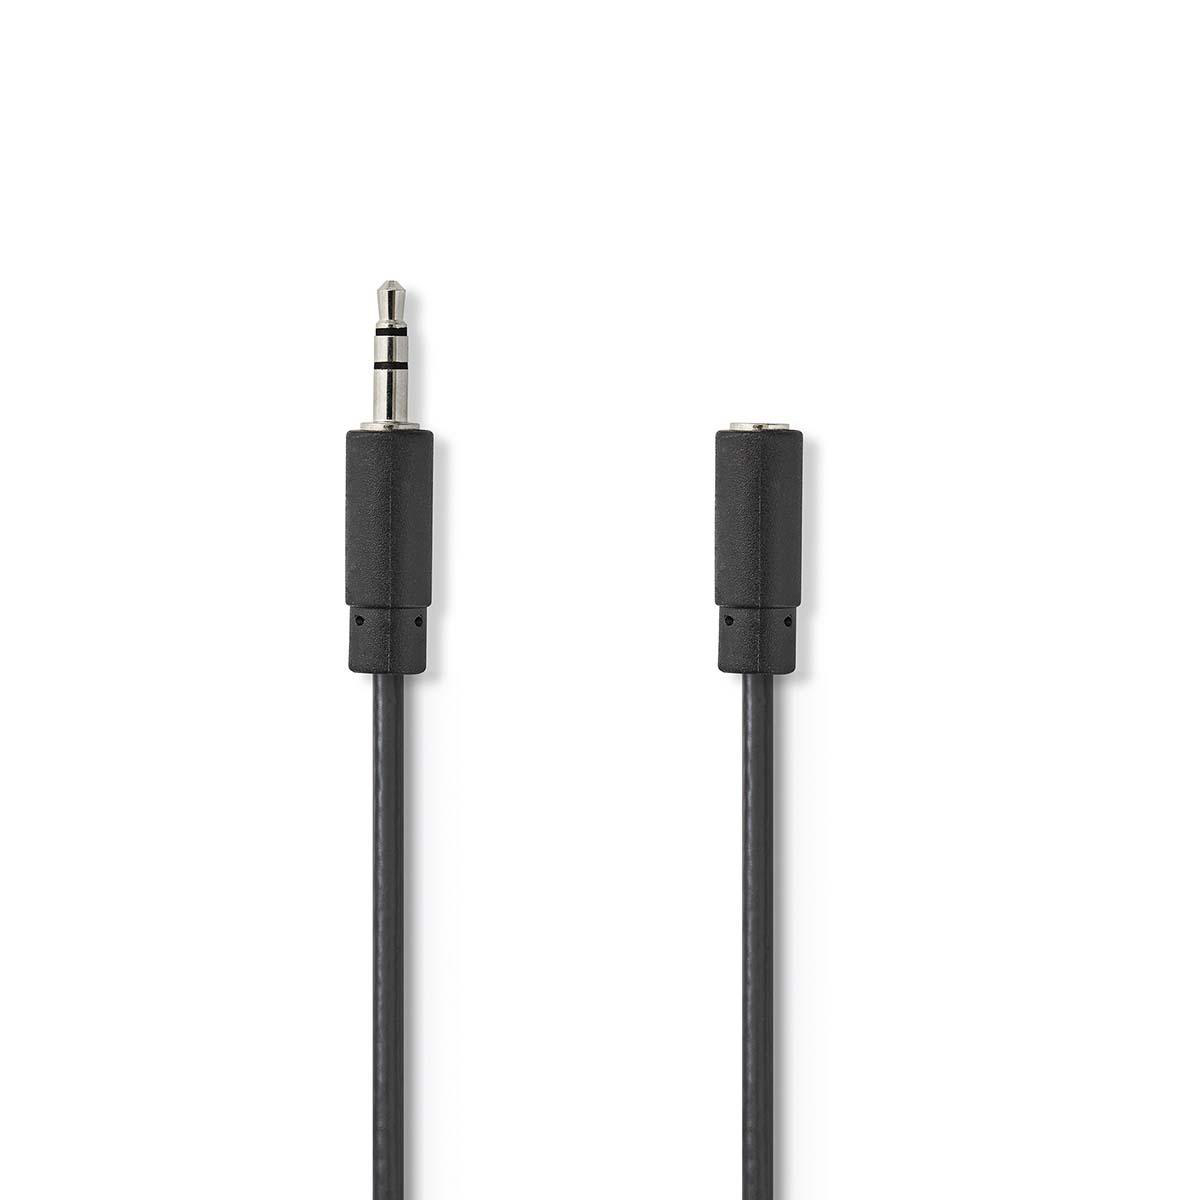 Nedis Stereo Audio kabel, 3.5 mm Male - 3.5 mm Female, 3m, zwart